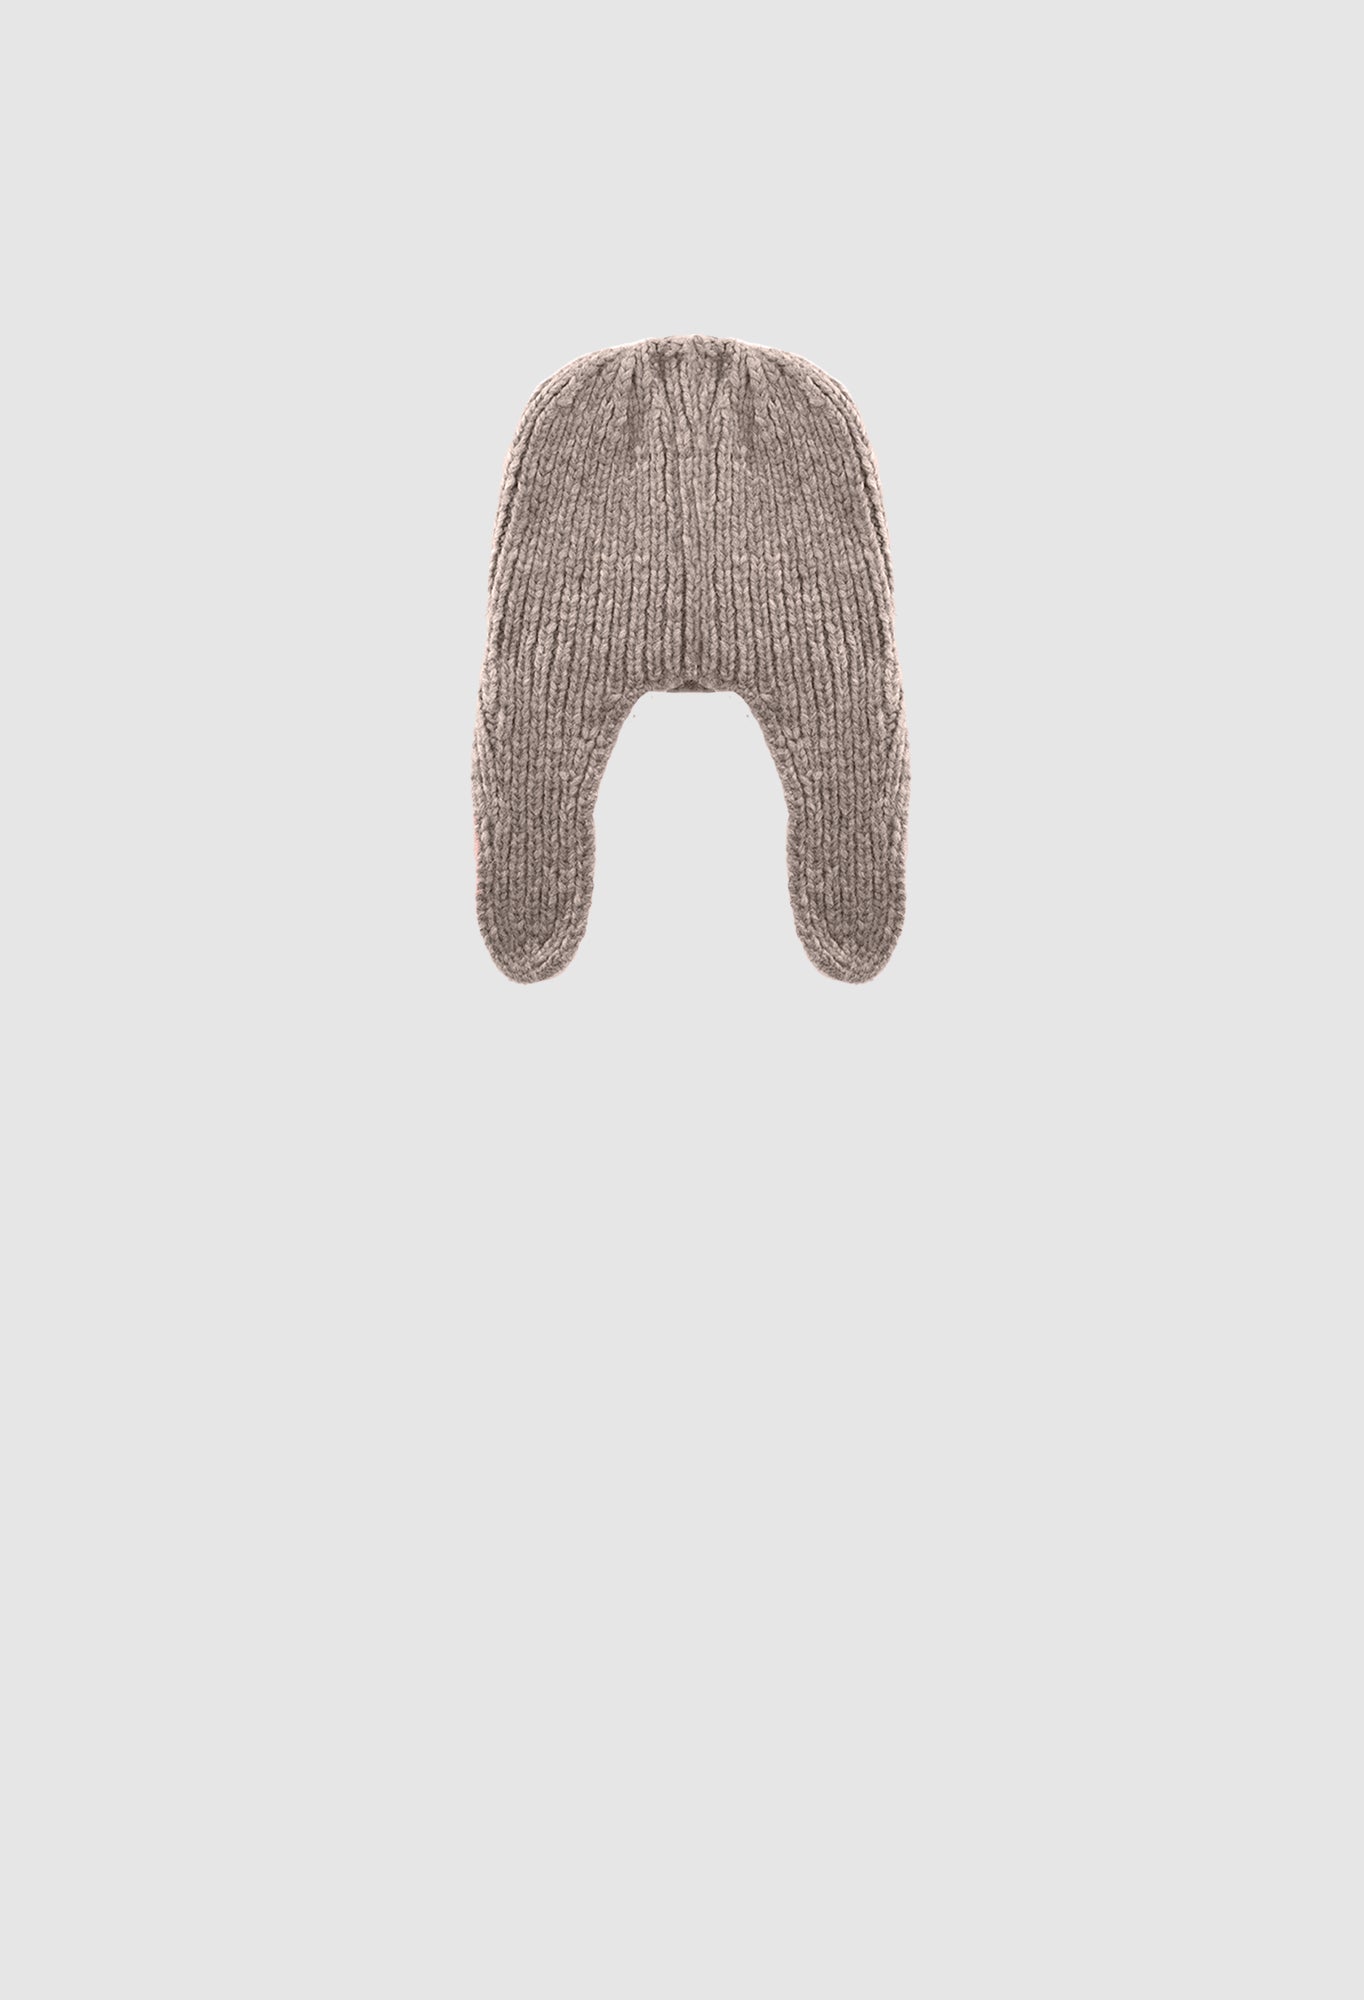 COLETTE - Hand-Knit Hat in Beige